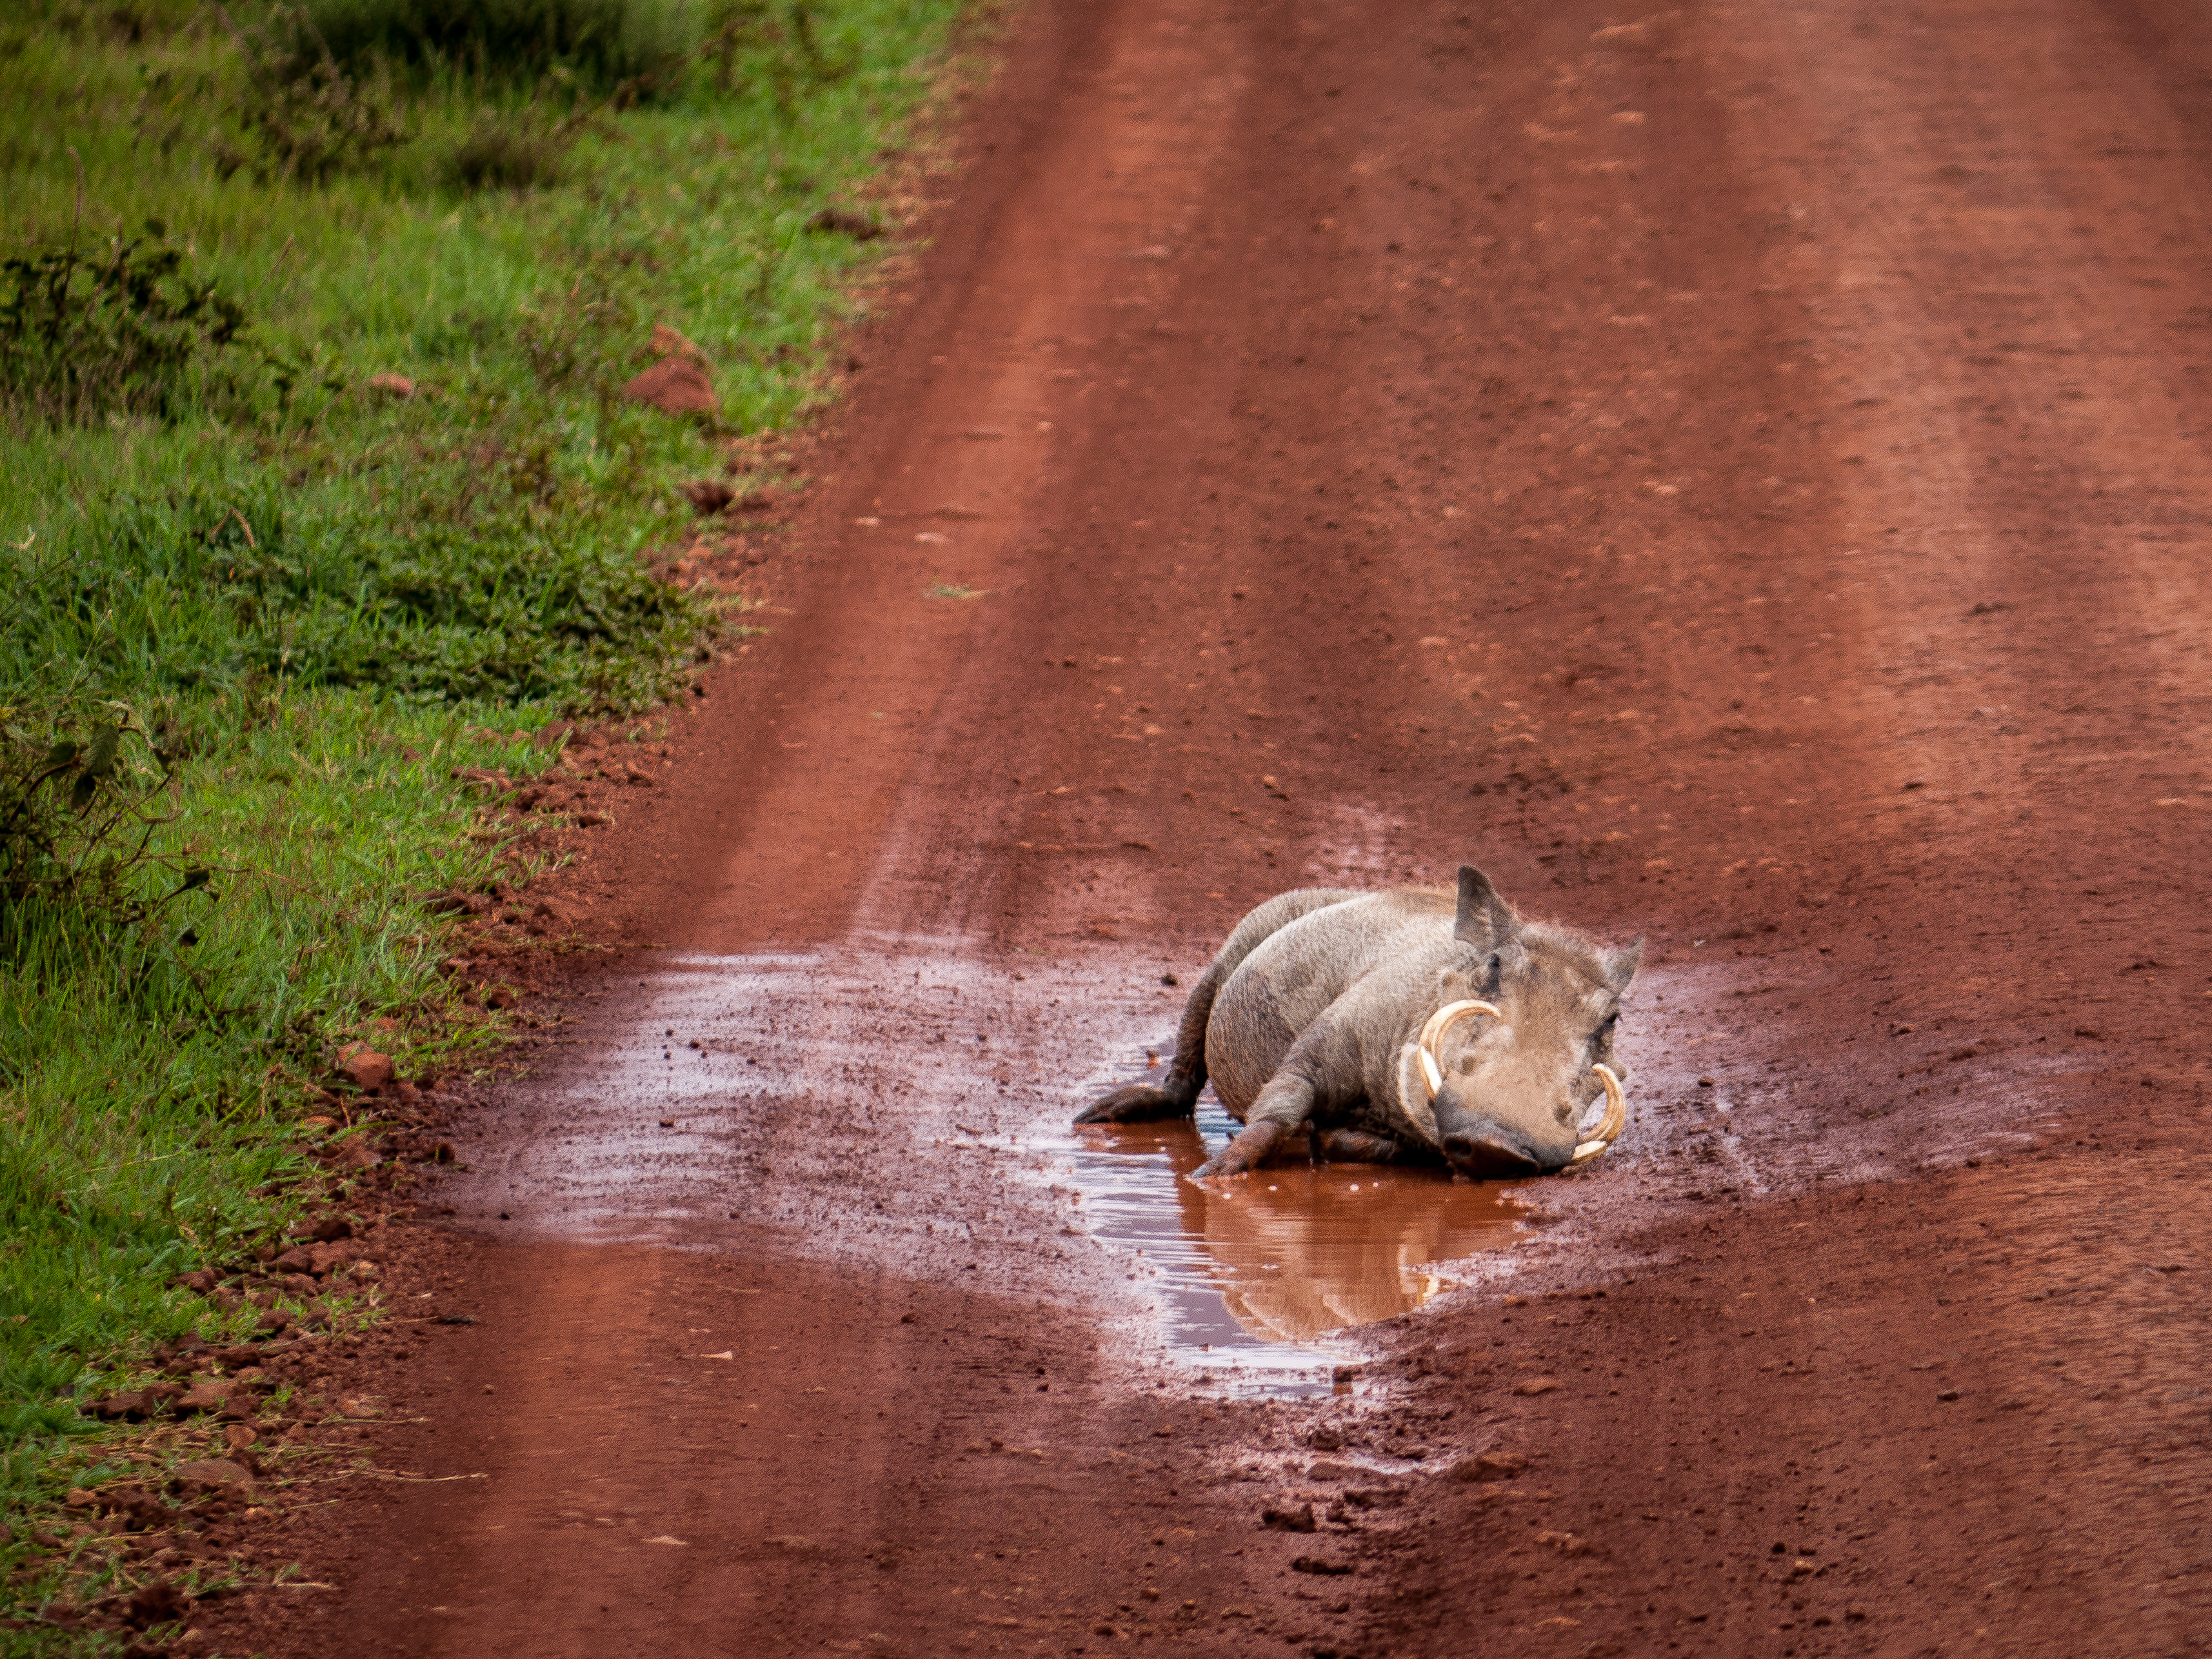 Warthog in Mud Puddle